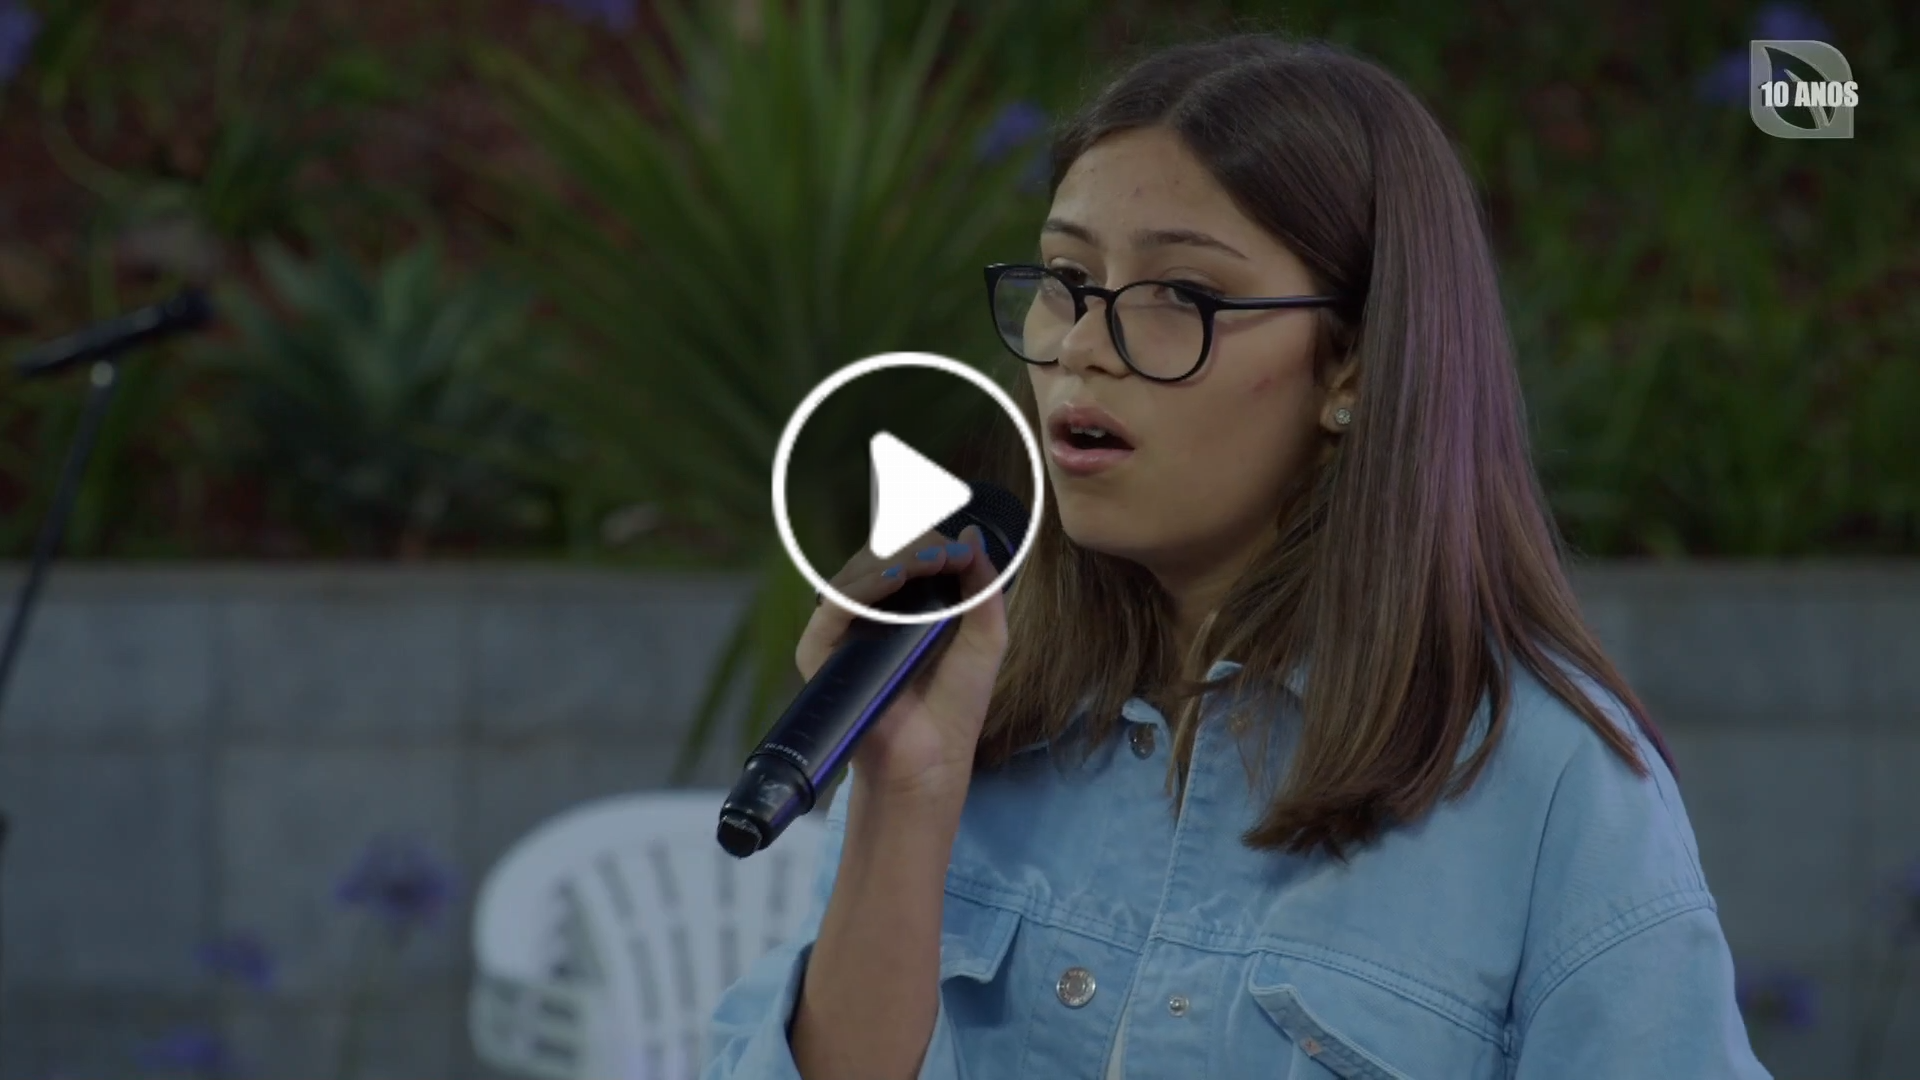 Ana Carolina Spínola canta para um público multicultural - DIA INTERCULTURAL